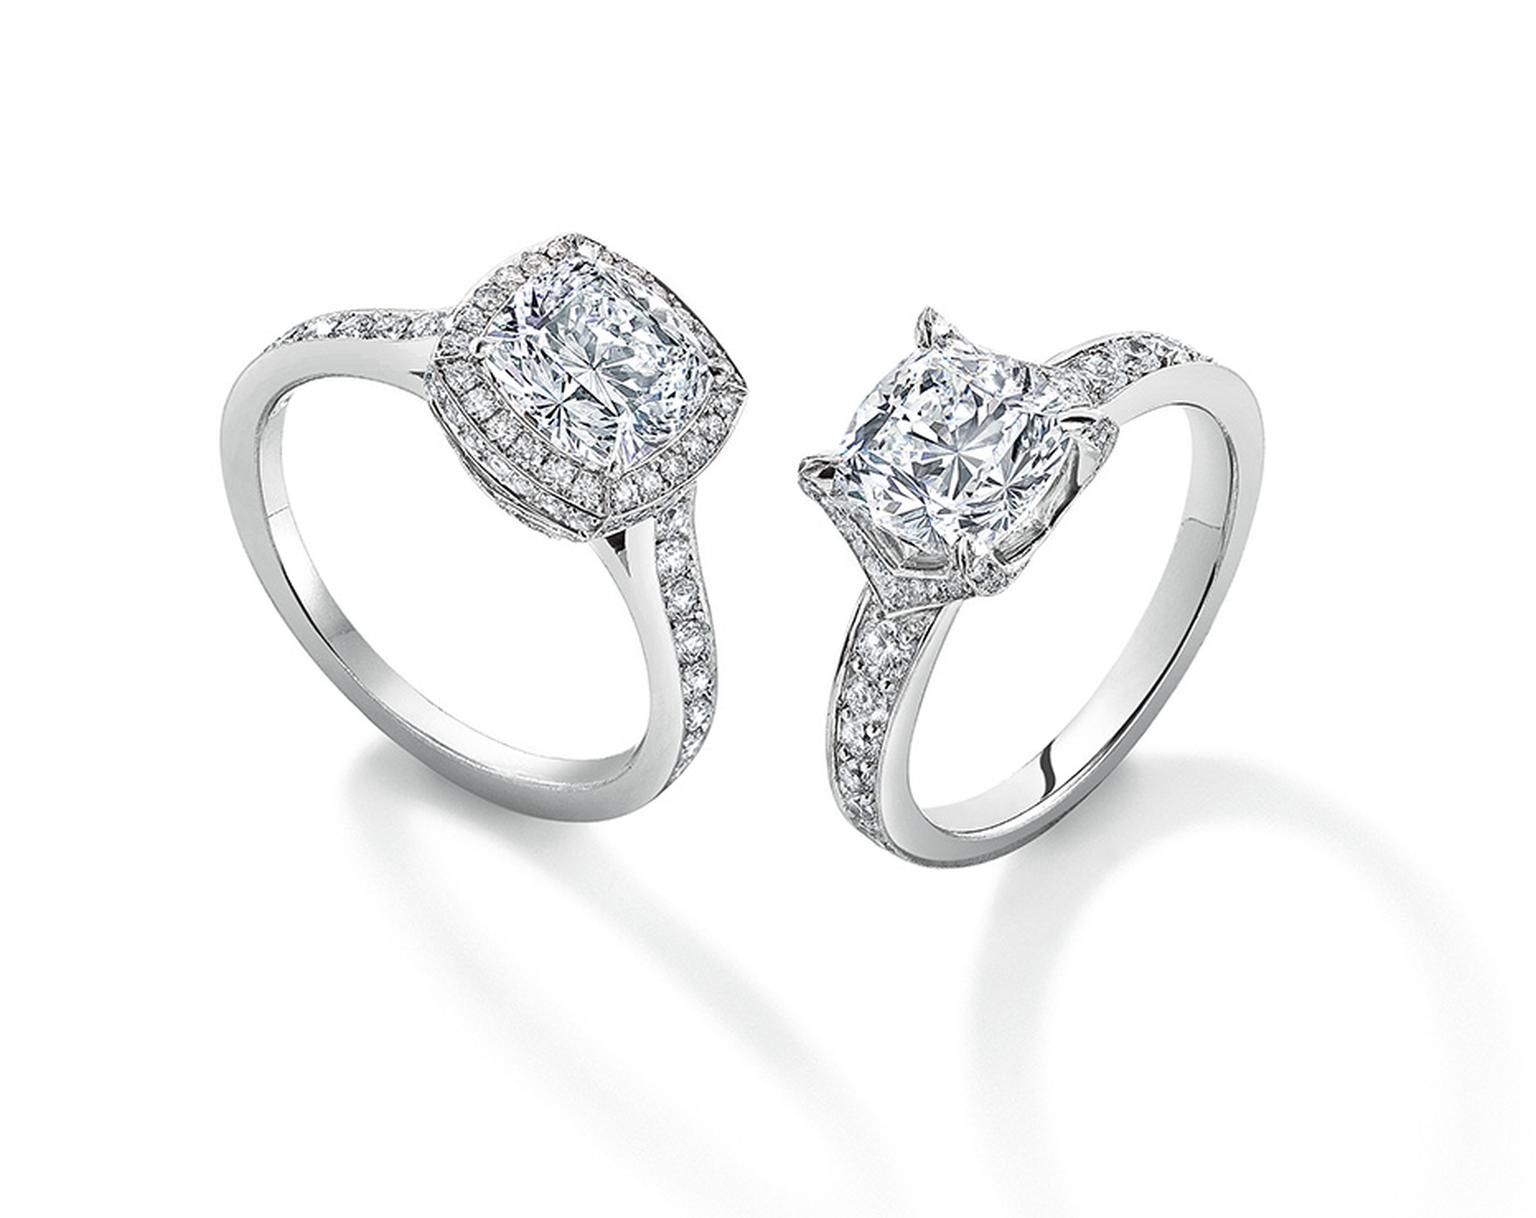 Asprey Cut diamond engagement rings with a micro-set diamond surround and pavé diamond V setting